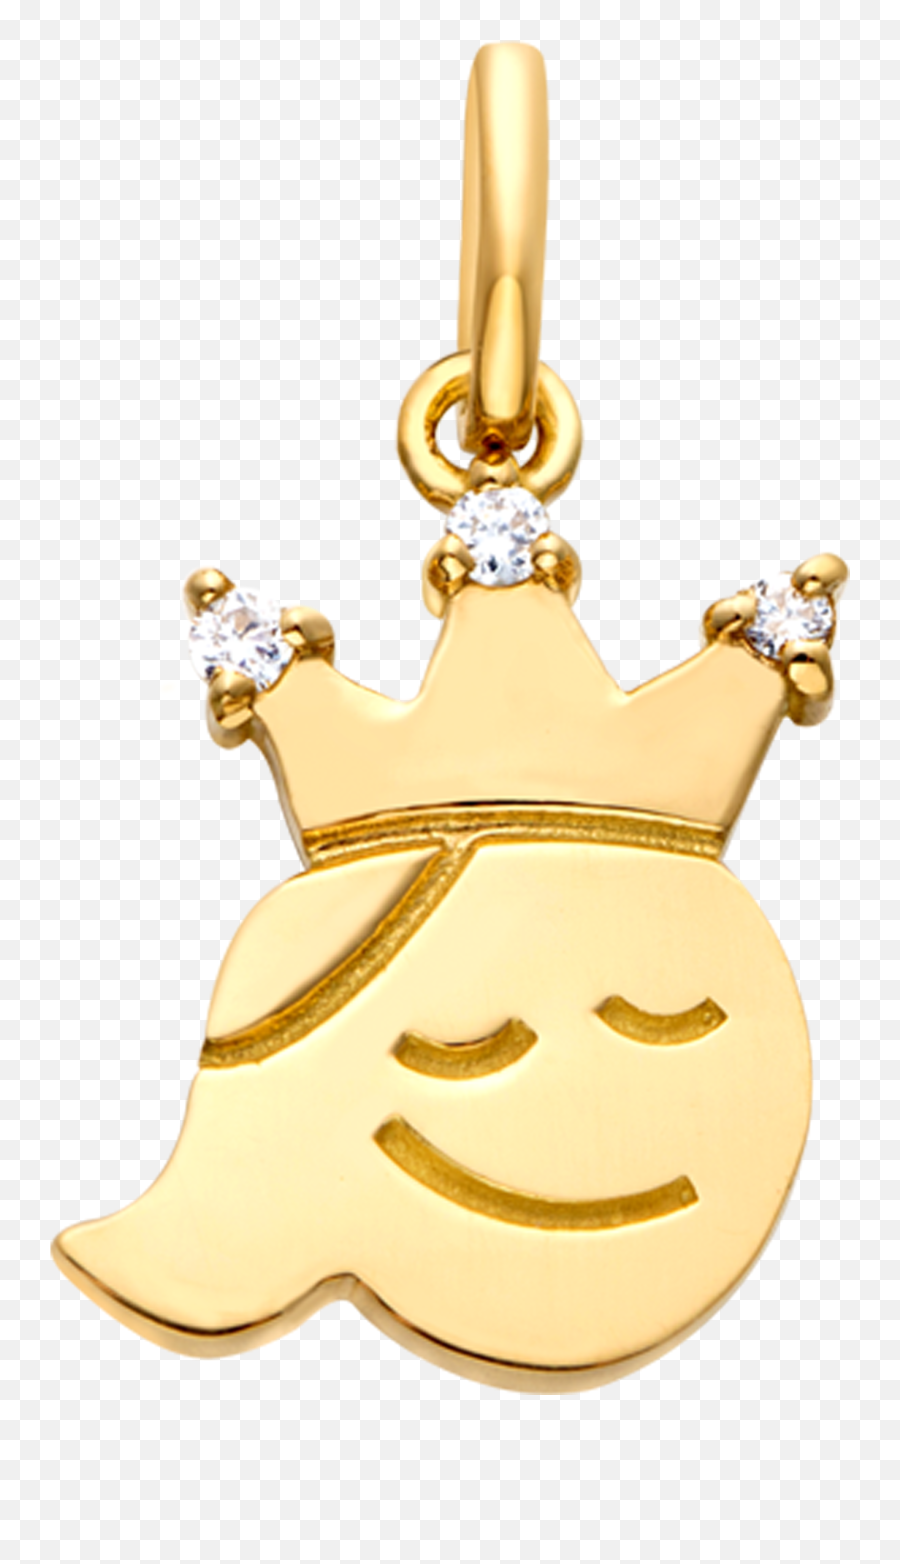 Circle Jewelry Official Site - 13 My Prince U0026 Princess Solid Emoji,Prince Crown Emoticon